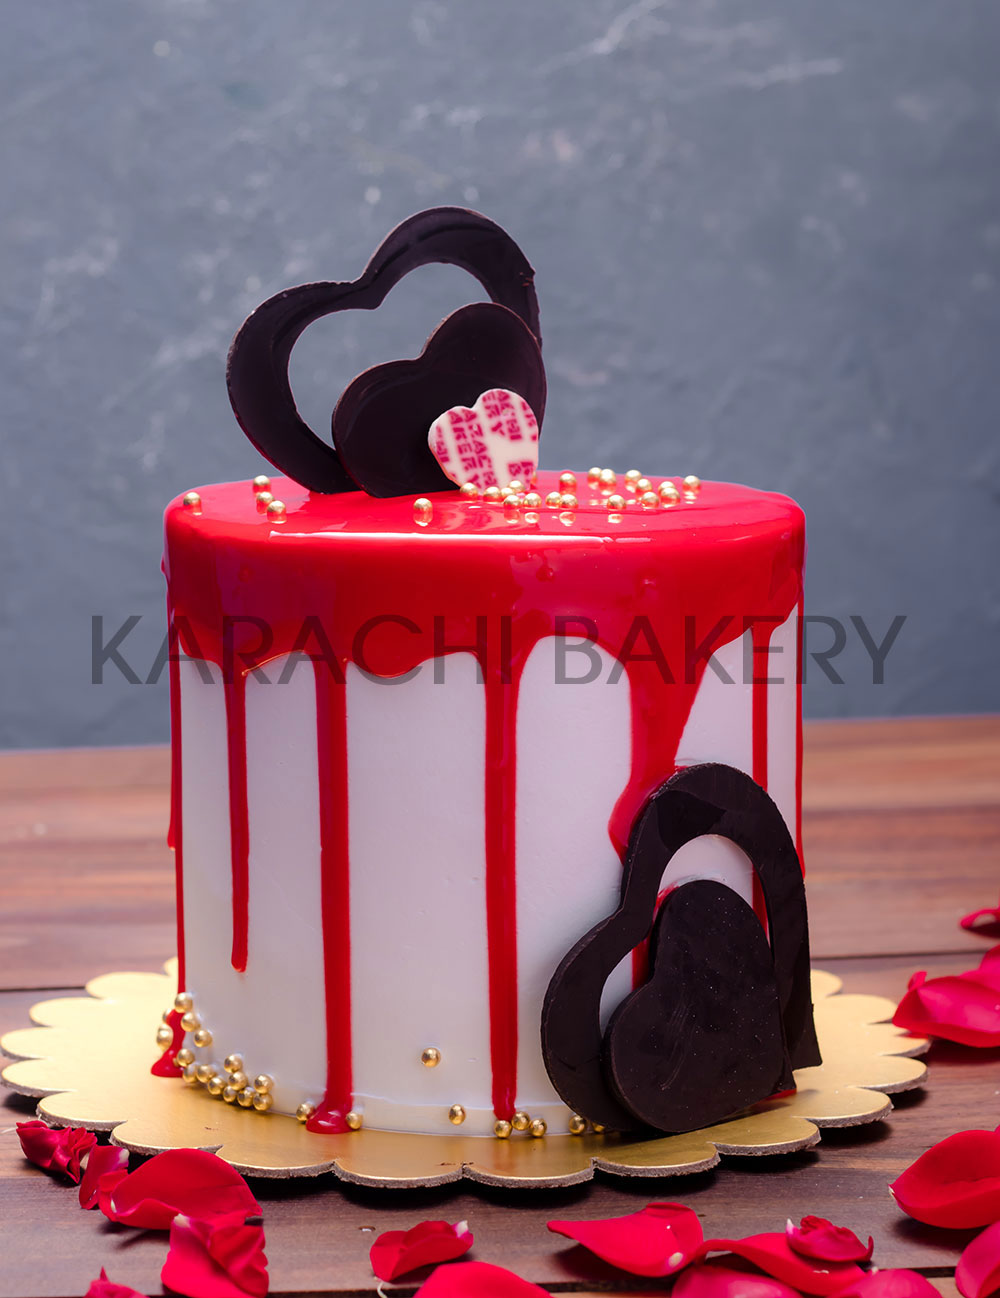 Valentine Special | Karachi Bakery